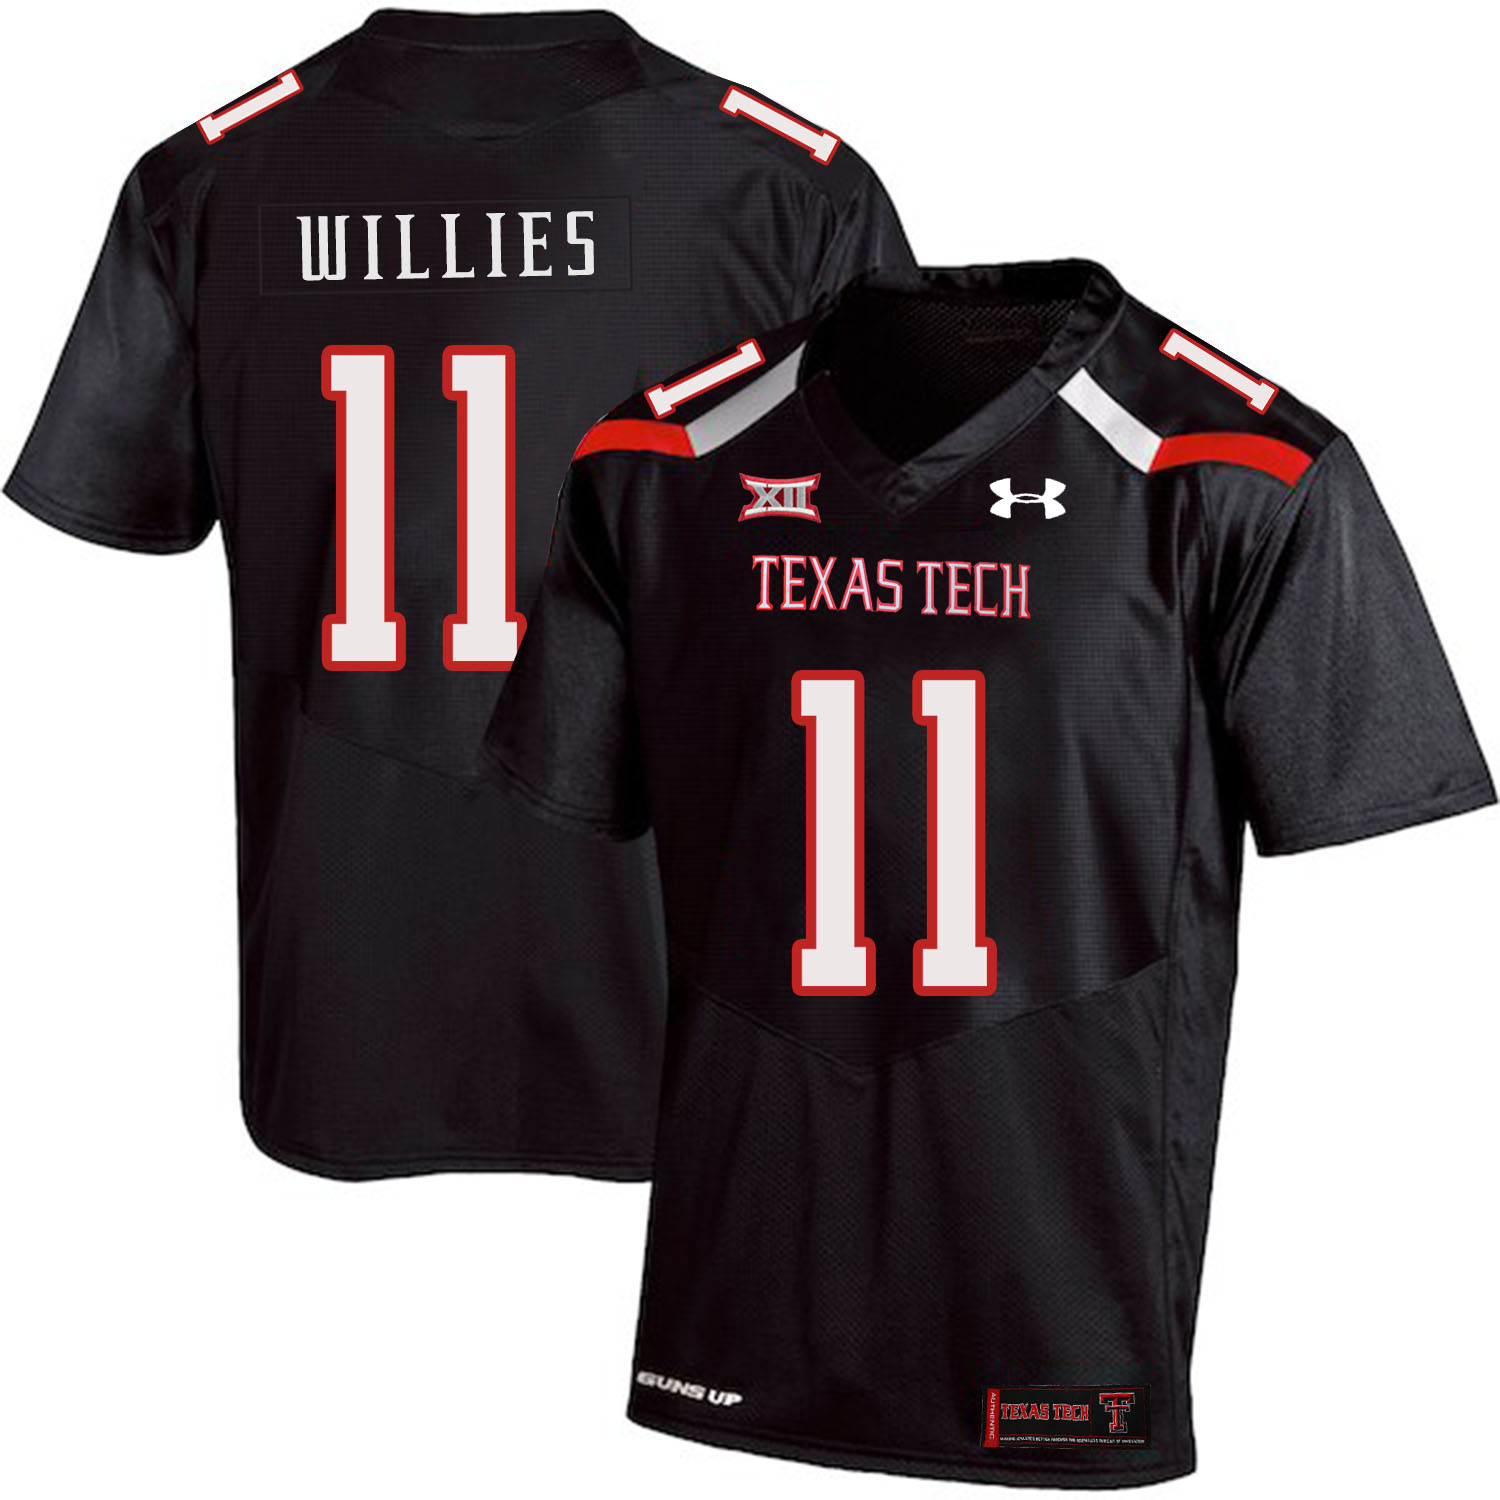 Texas Tech Red Raiders 11 Derrick Willies Black College Football Jersey